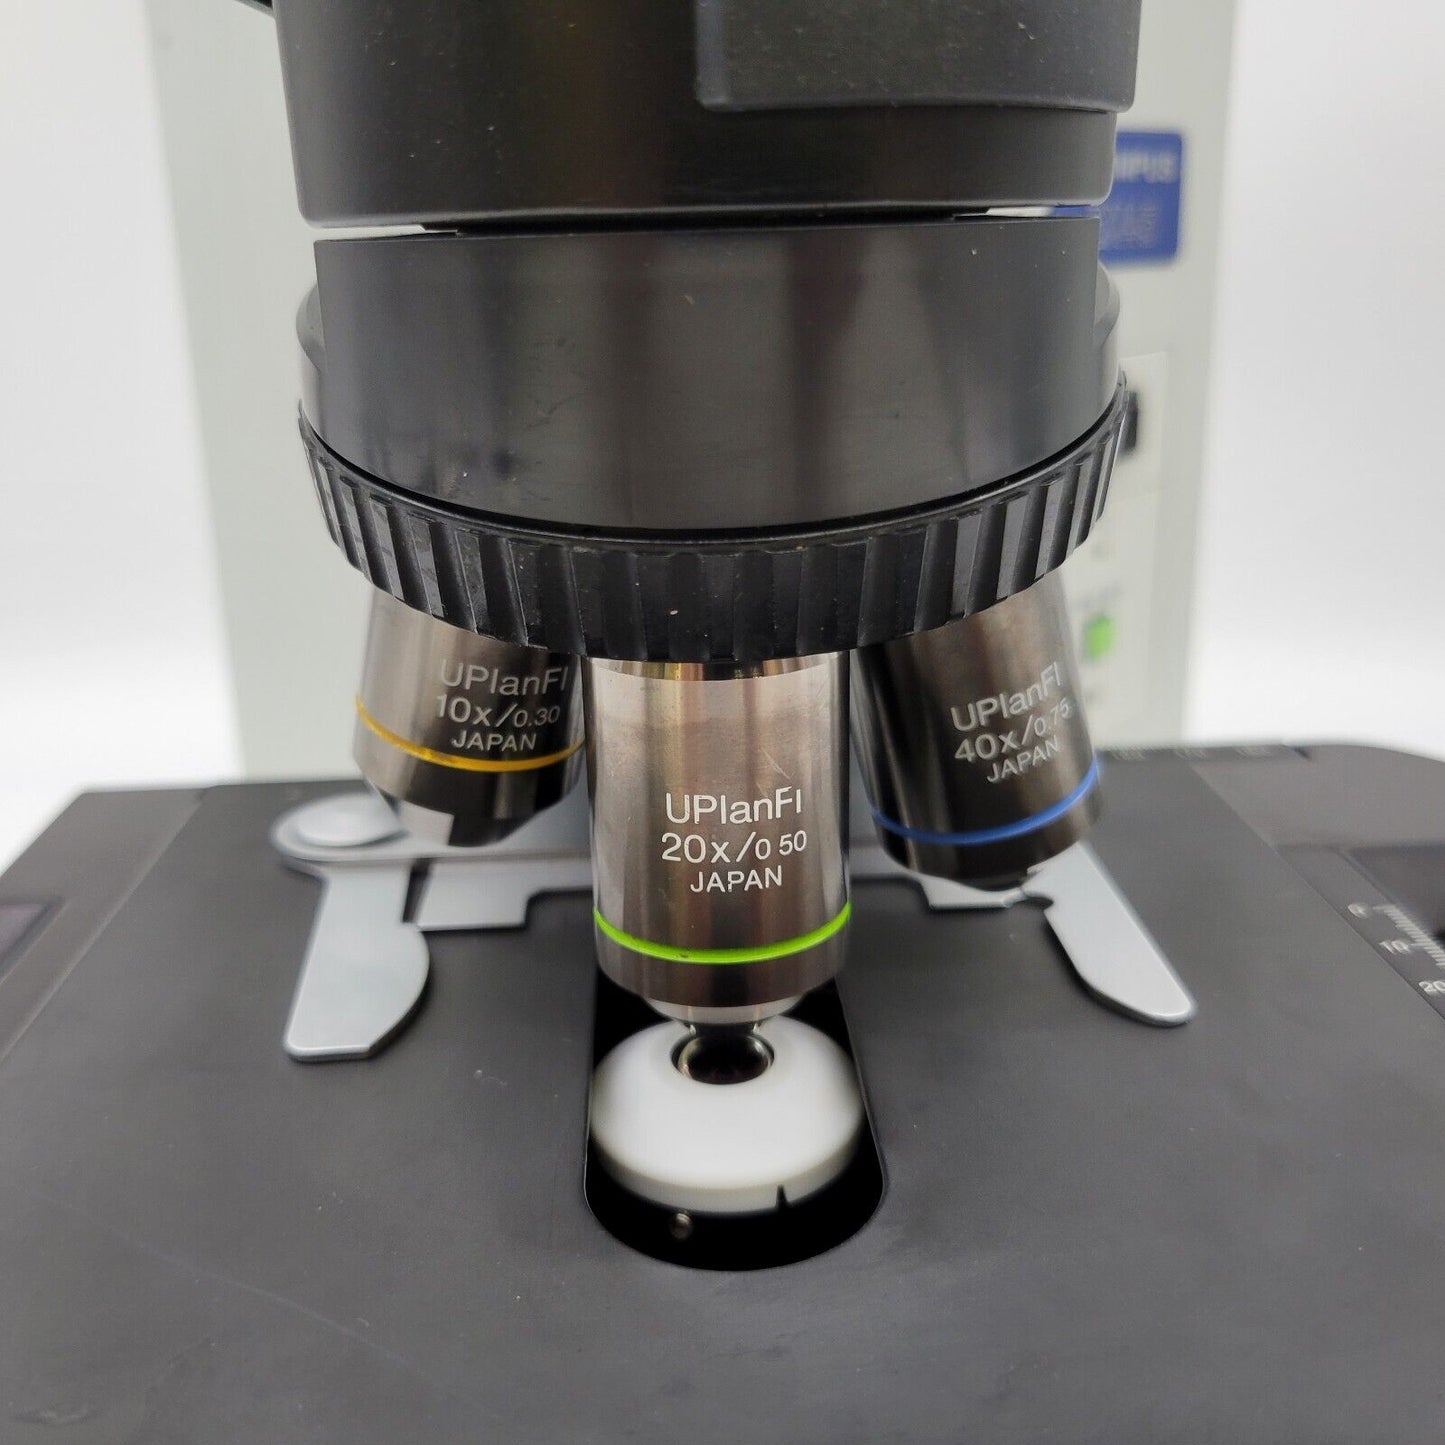 Olympus Microscope BX45 Pathology / Mohs with Fluorites & Camera Port - microscopemarketplace